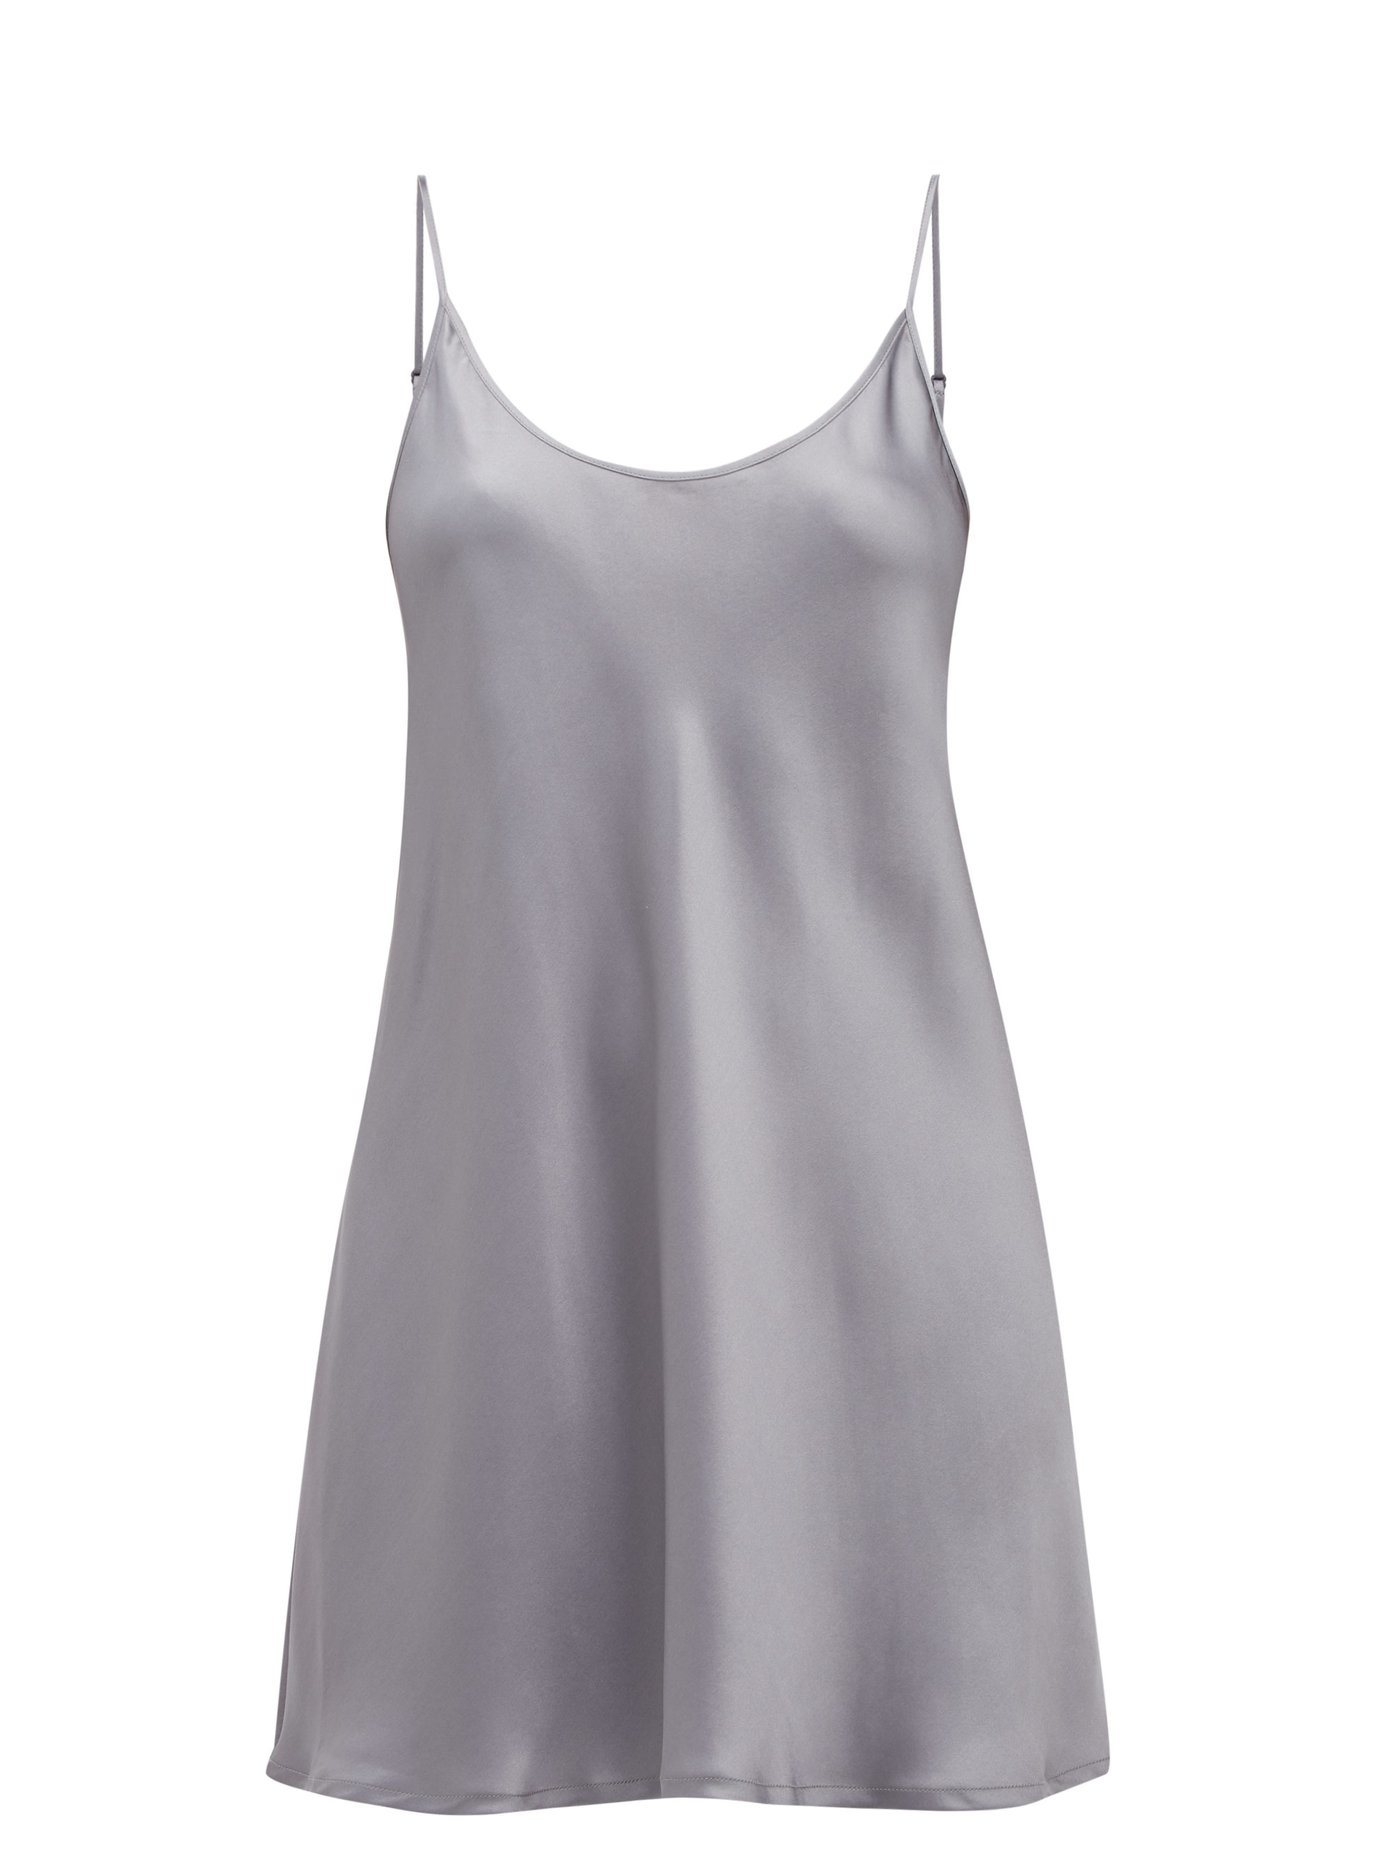 grey slip dress